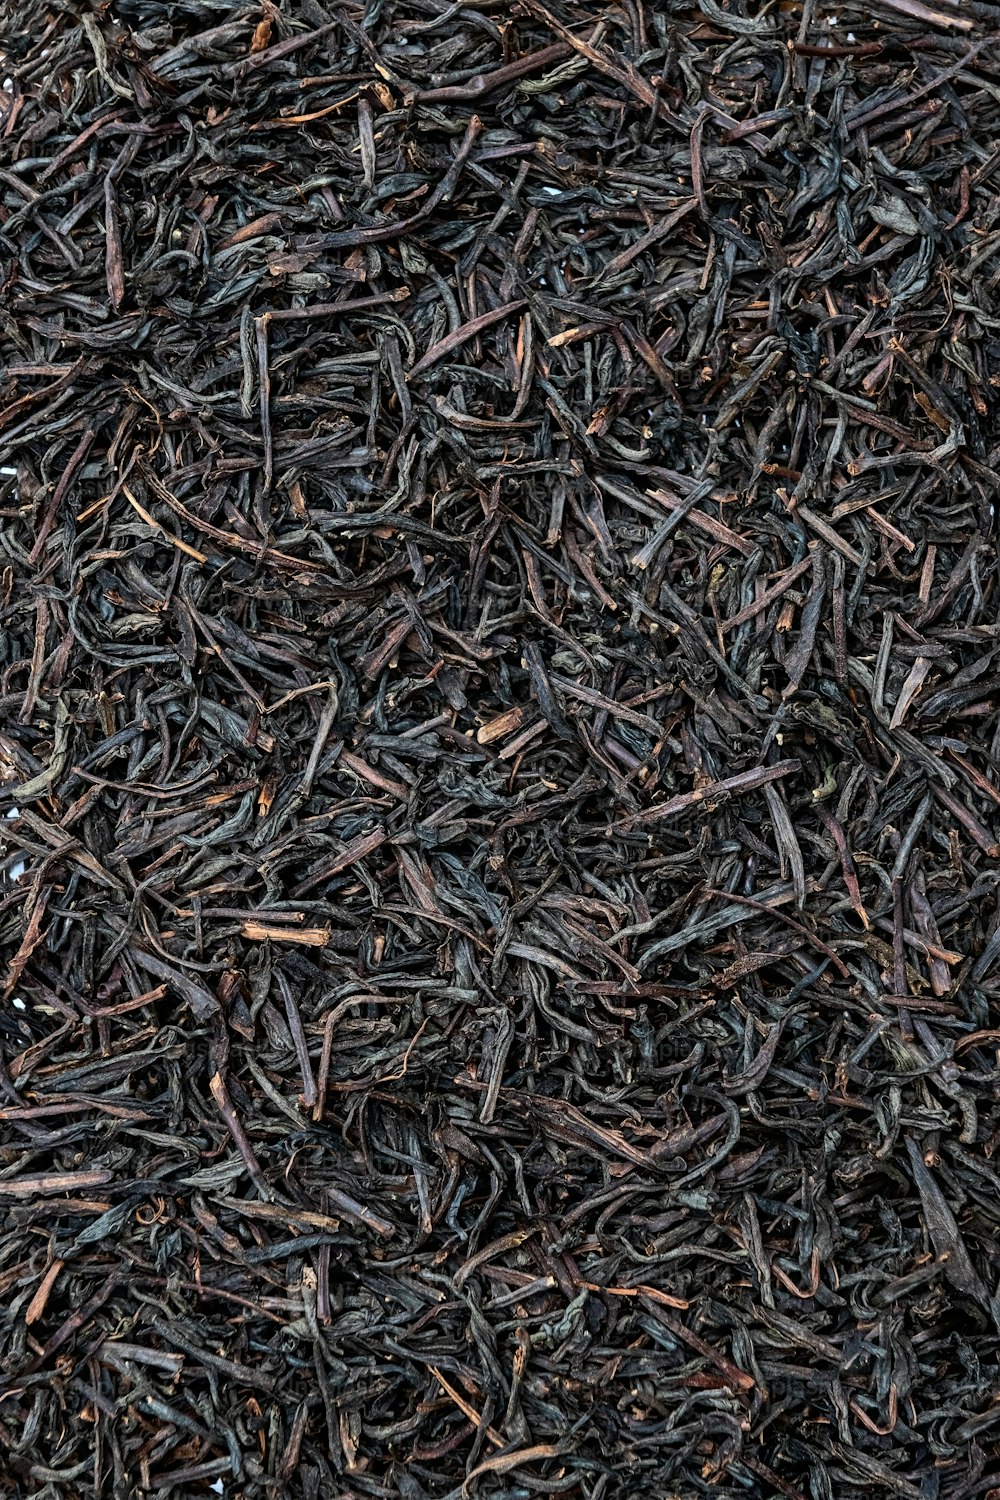 a close up of a pile of black tea